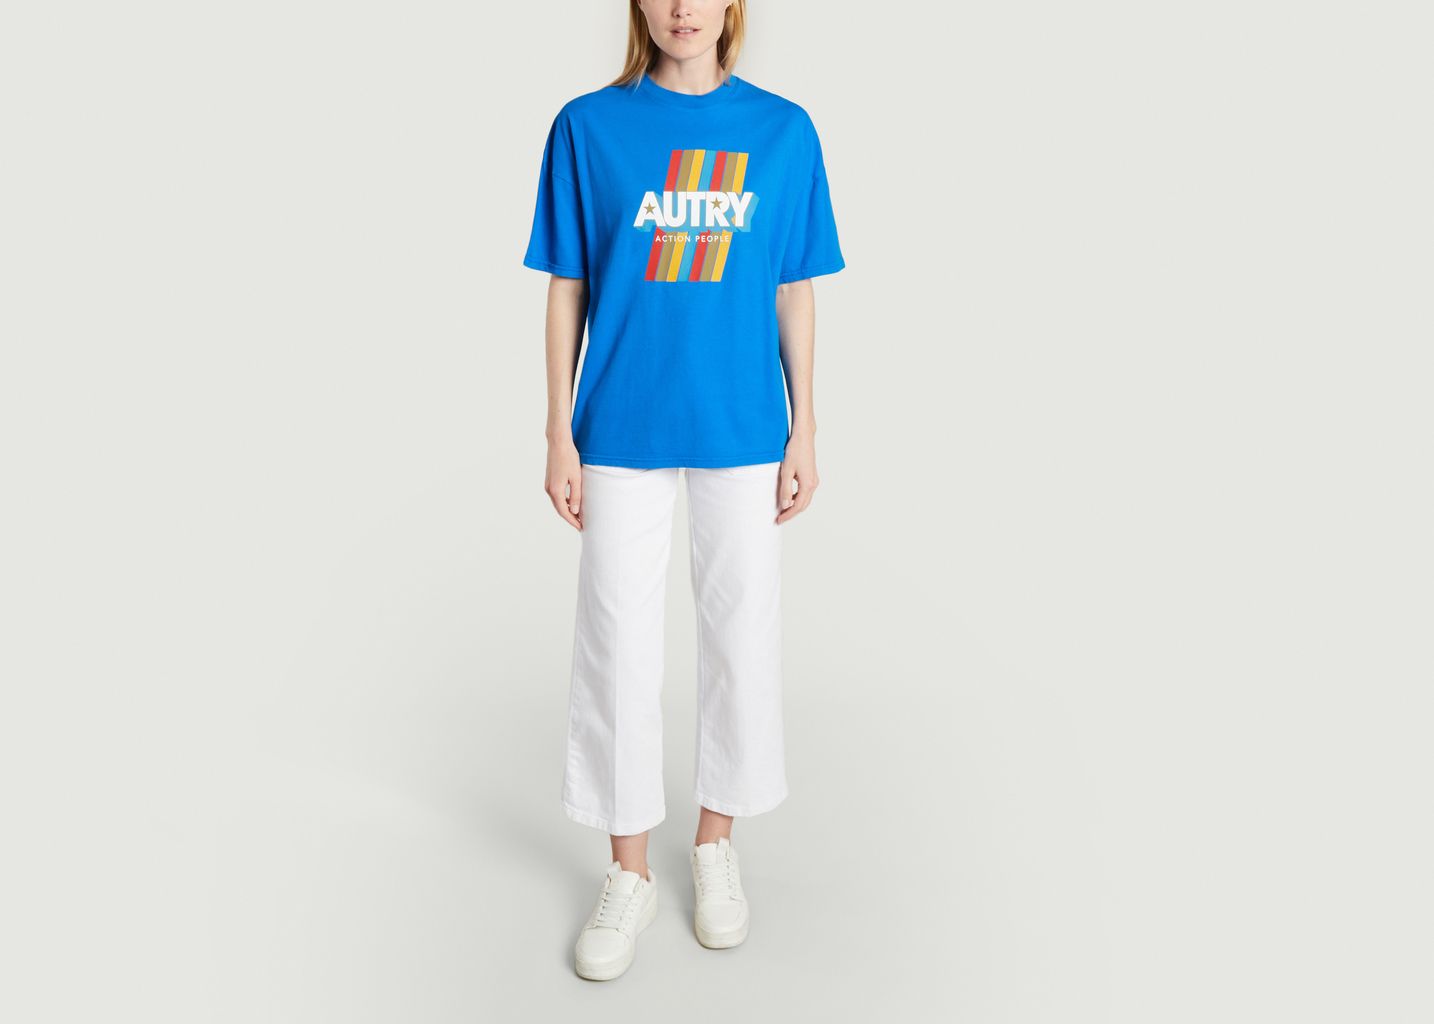 T-shirt Aerobic - AUTRY